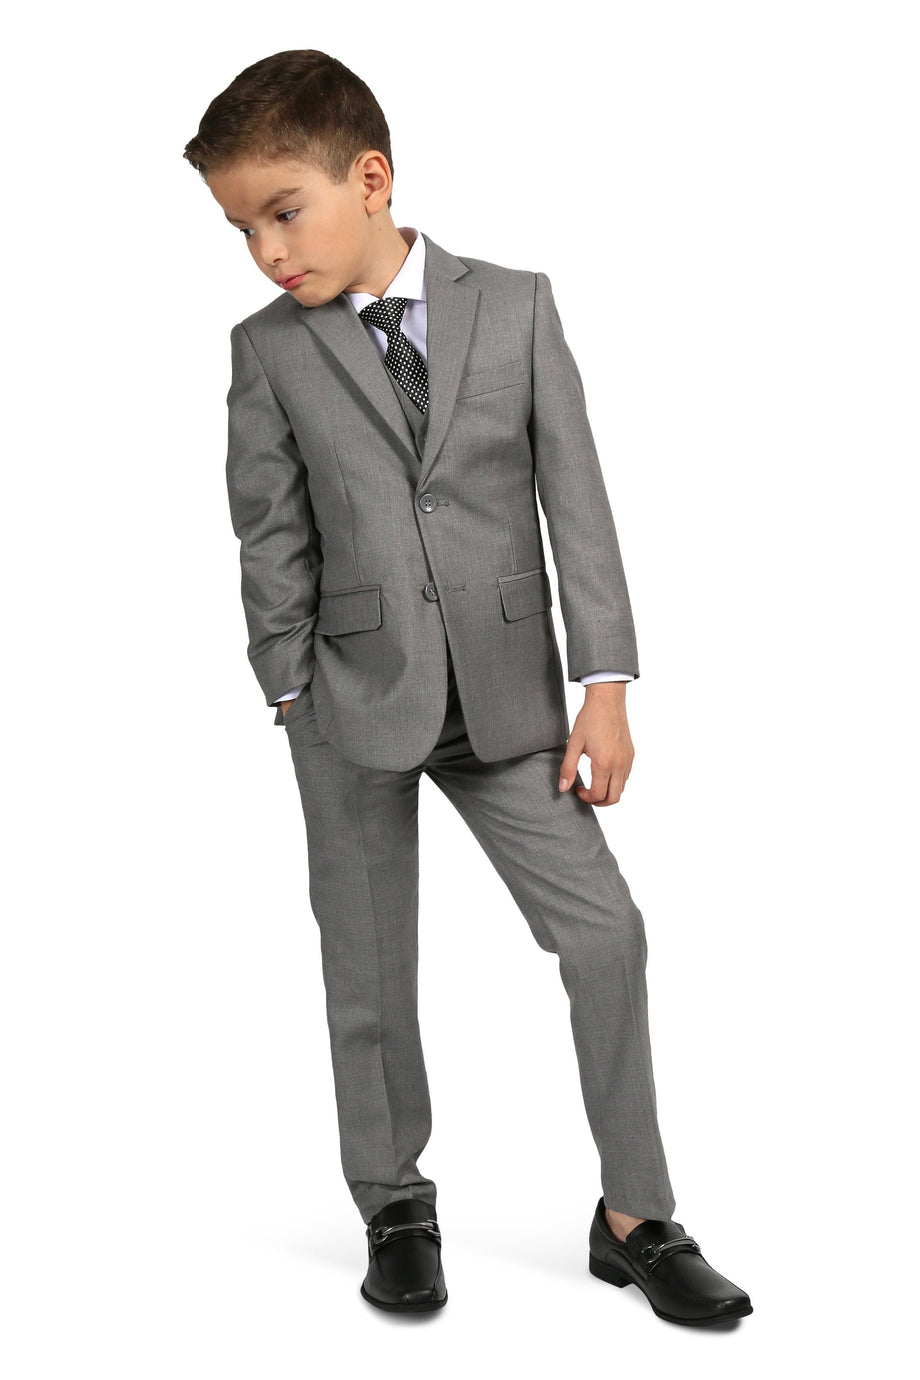 Ferrecci "Jax" Kids Light Grey Suit 5-Piece Set